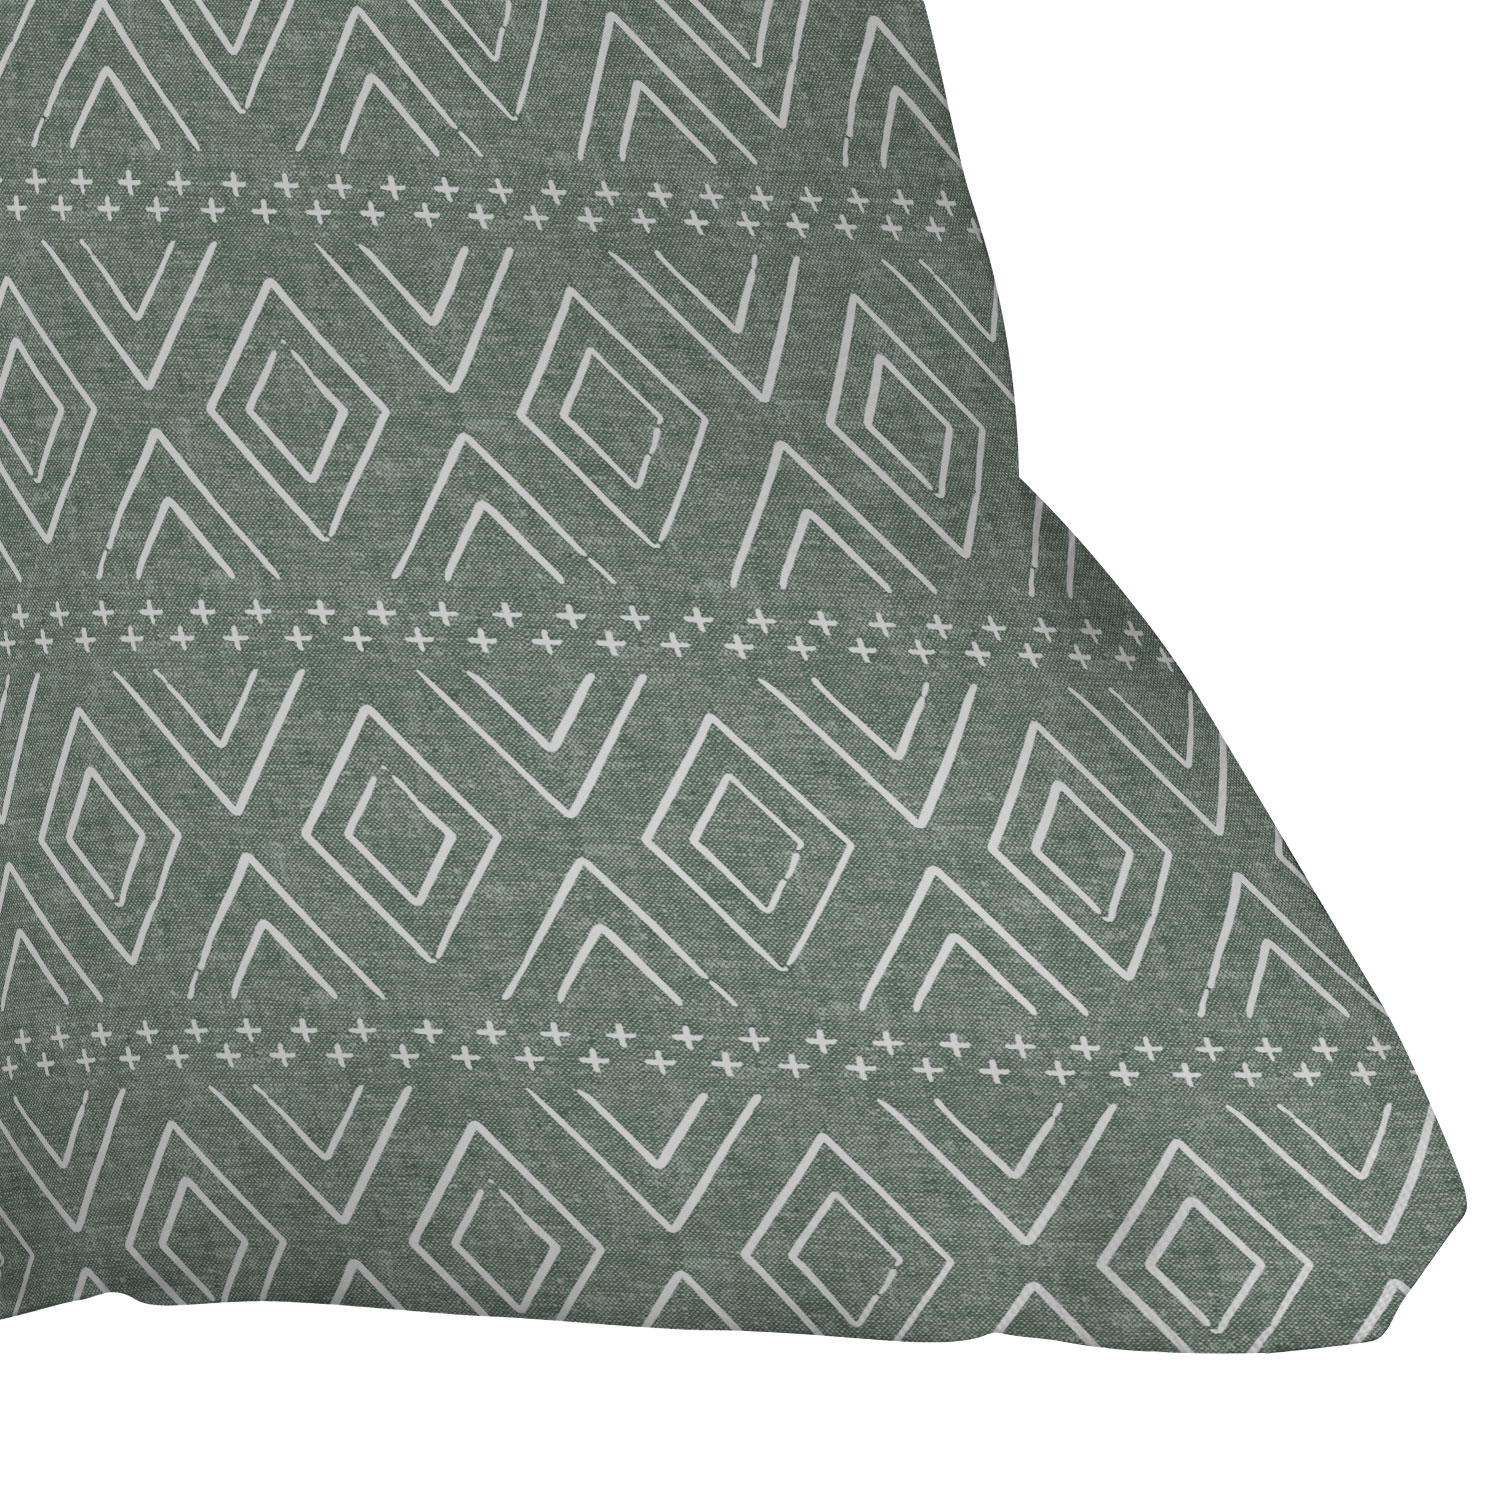 Farmhouse Diamonds Sage by Little Arrow Design Co - Outdoor Throw Pillow 16" x 16" - Image 2